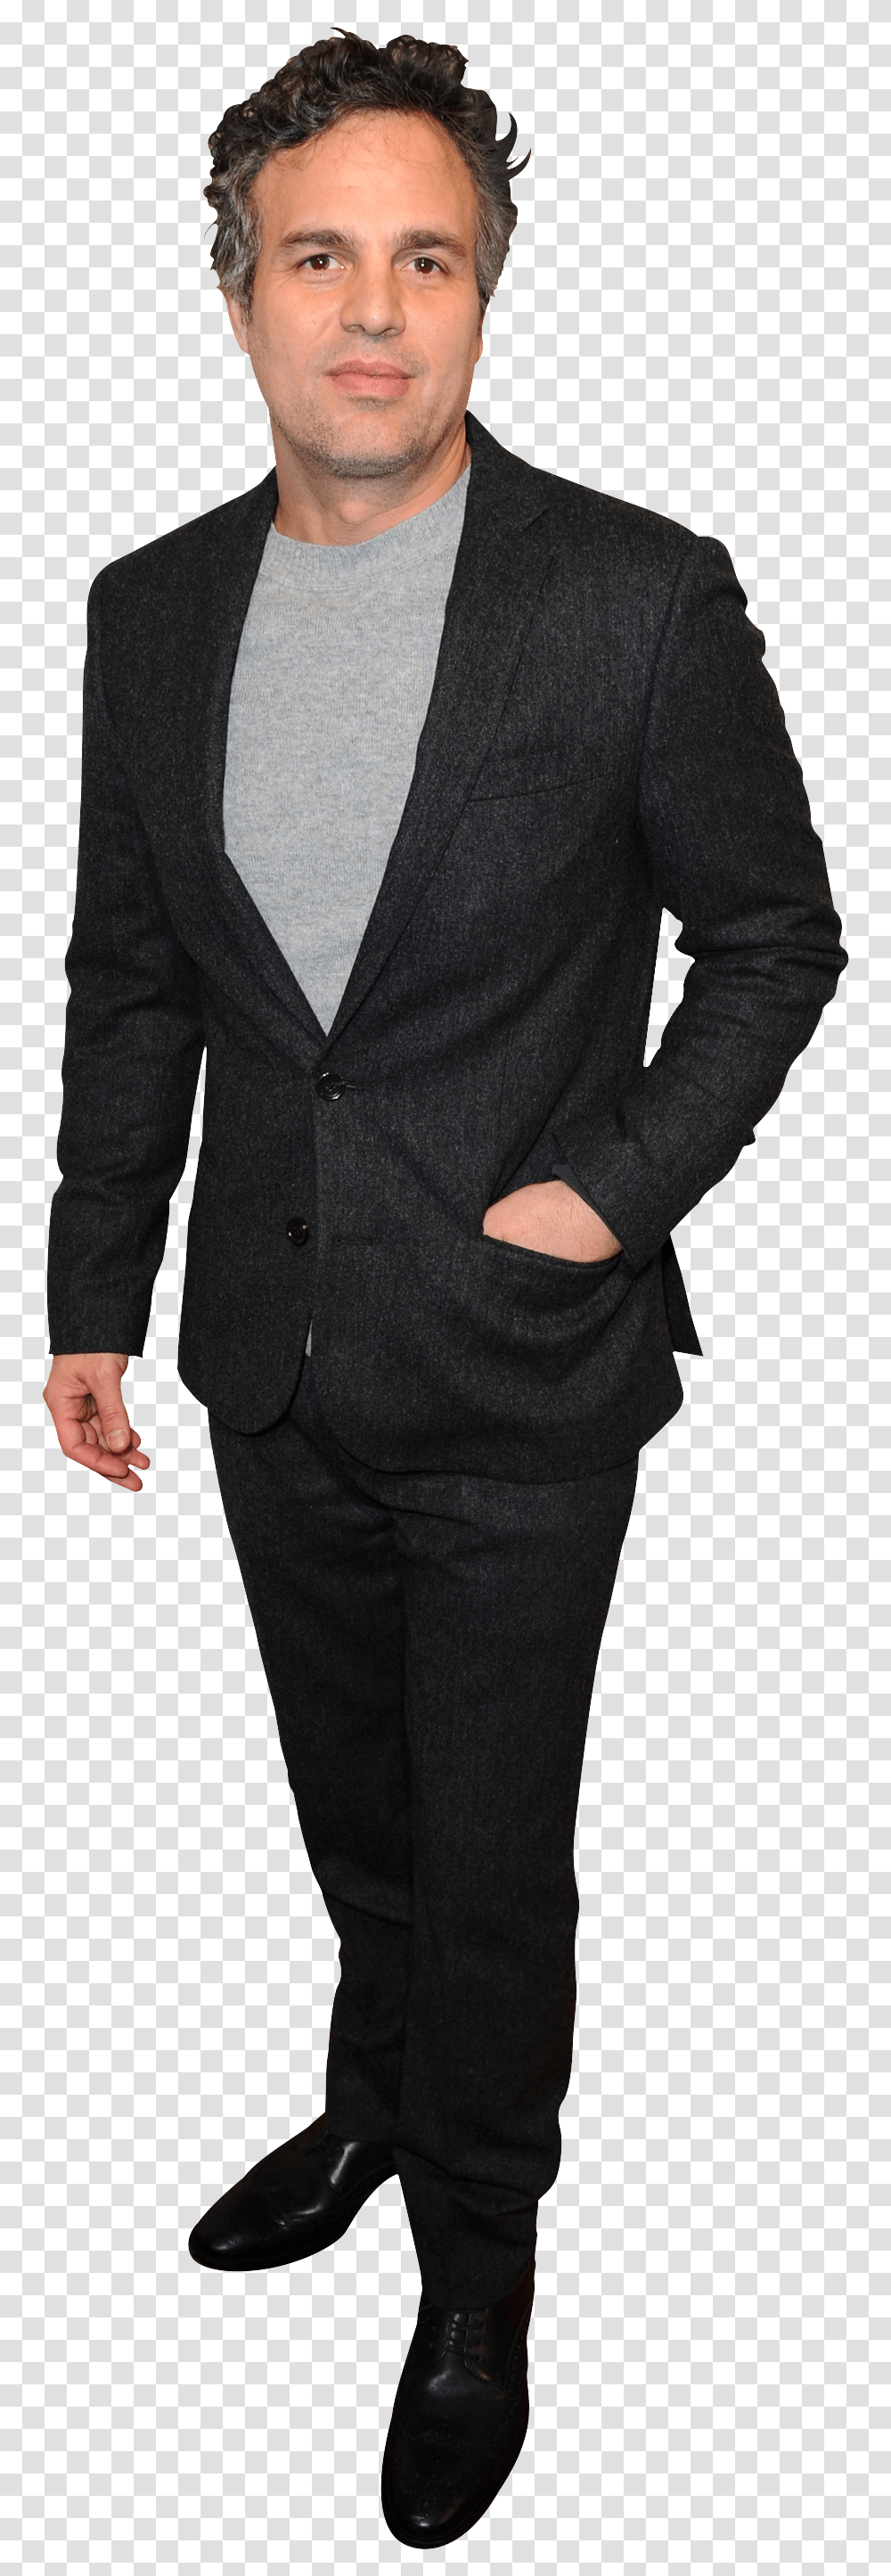 Tuxedo, Apparel, Suit, Overcoat Transparent Png